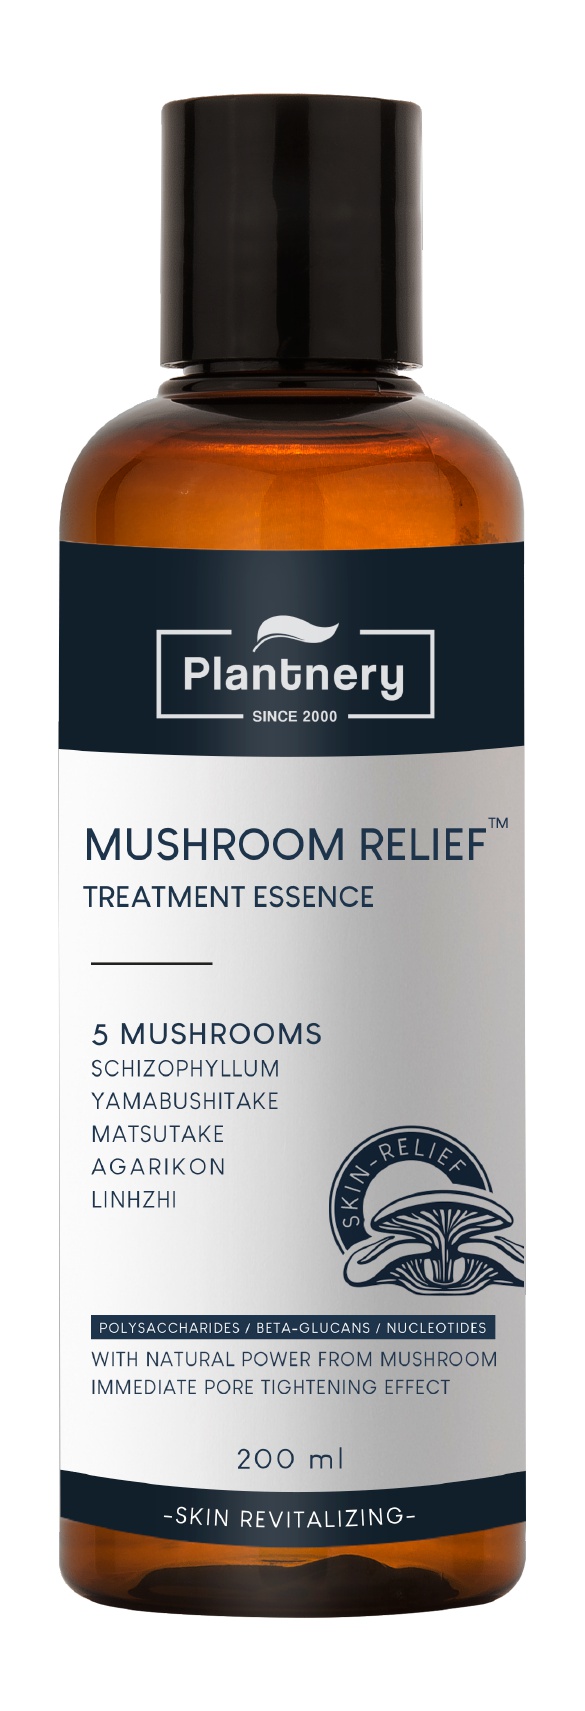 Plantnery Mushroom Relief Treatment Essence